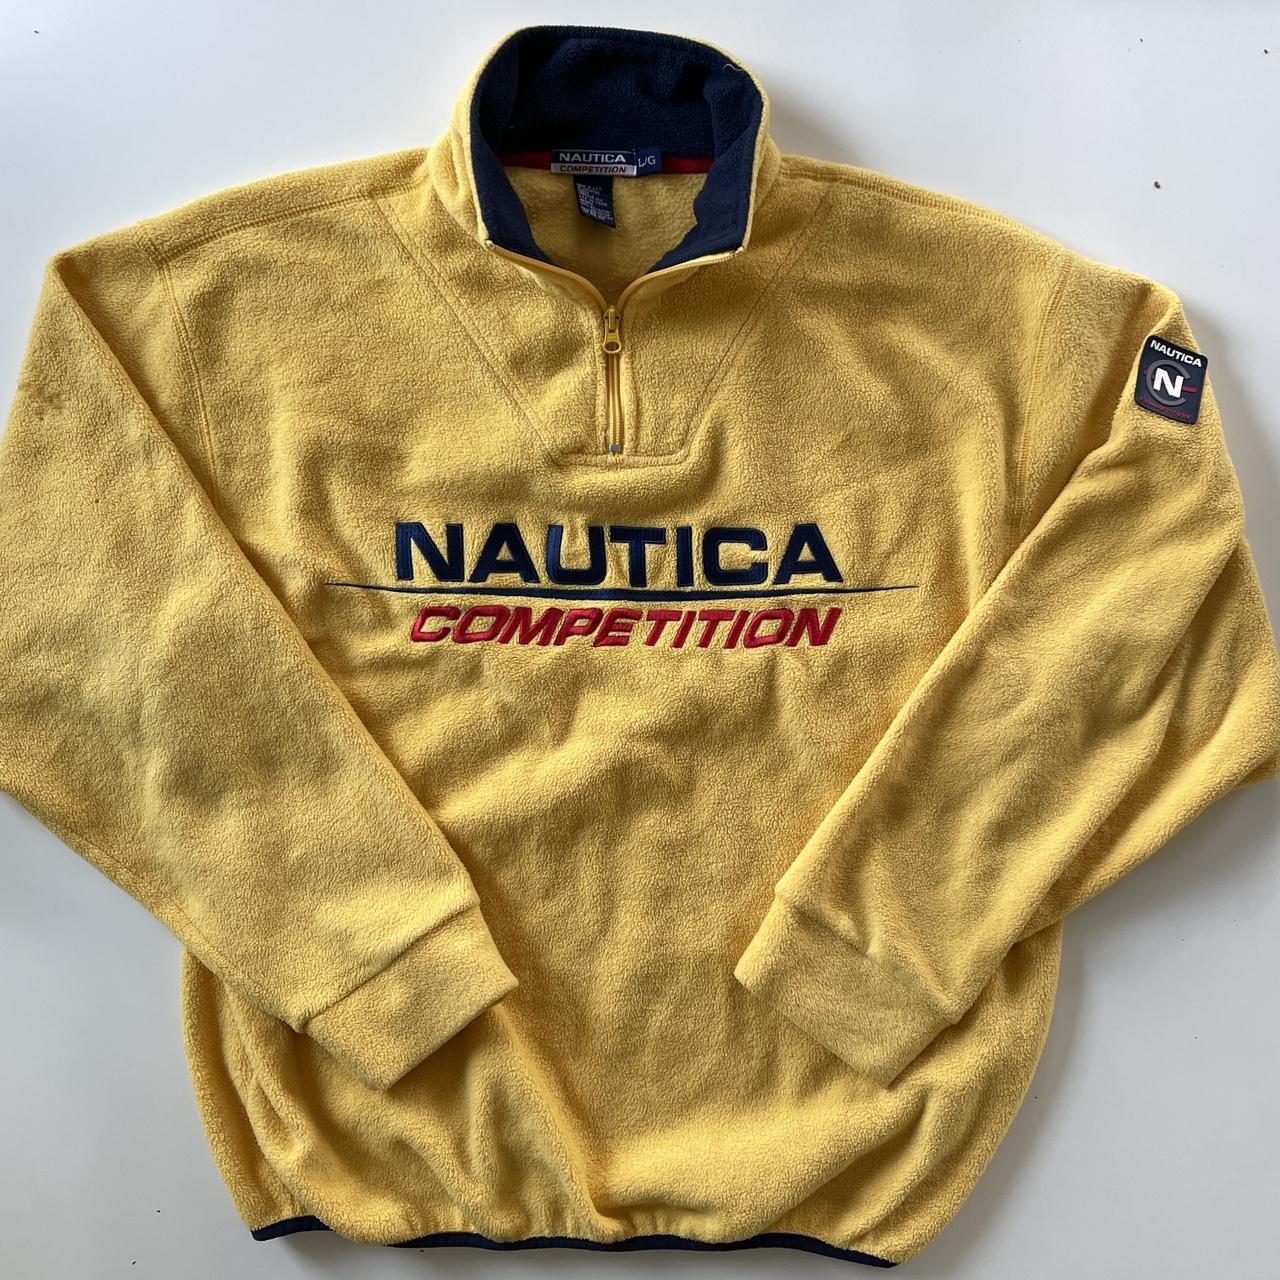 Nautica Men's Yellow and Blue Jacket